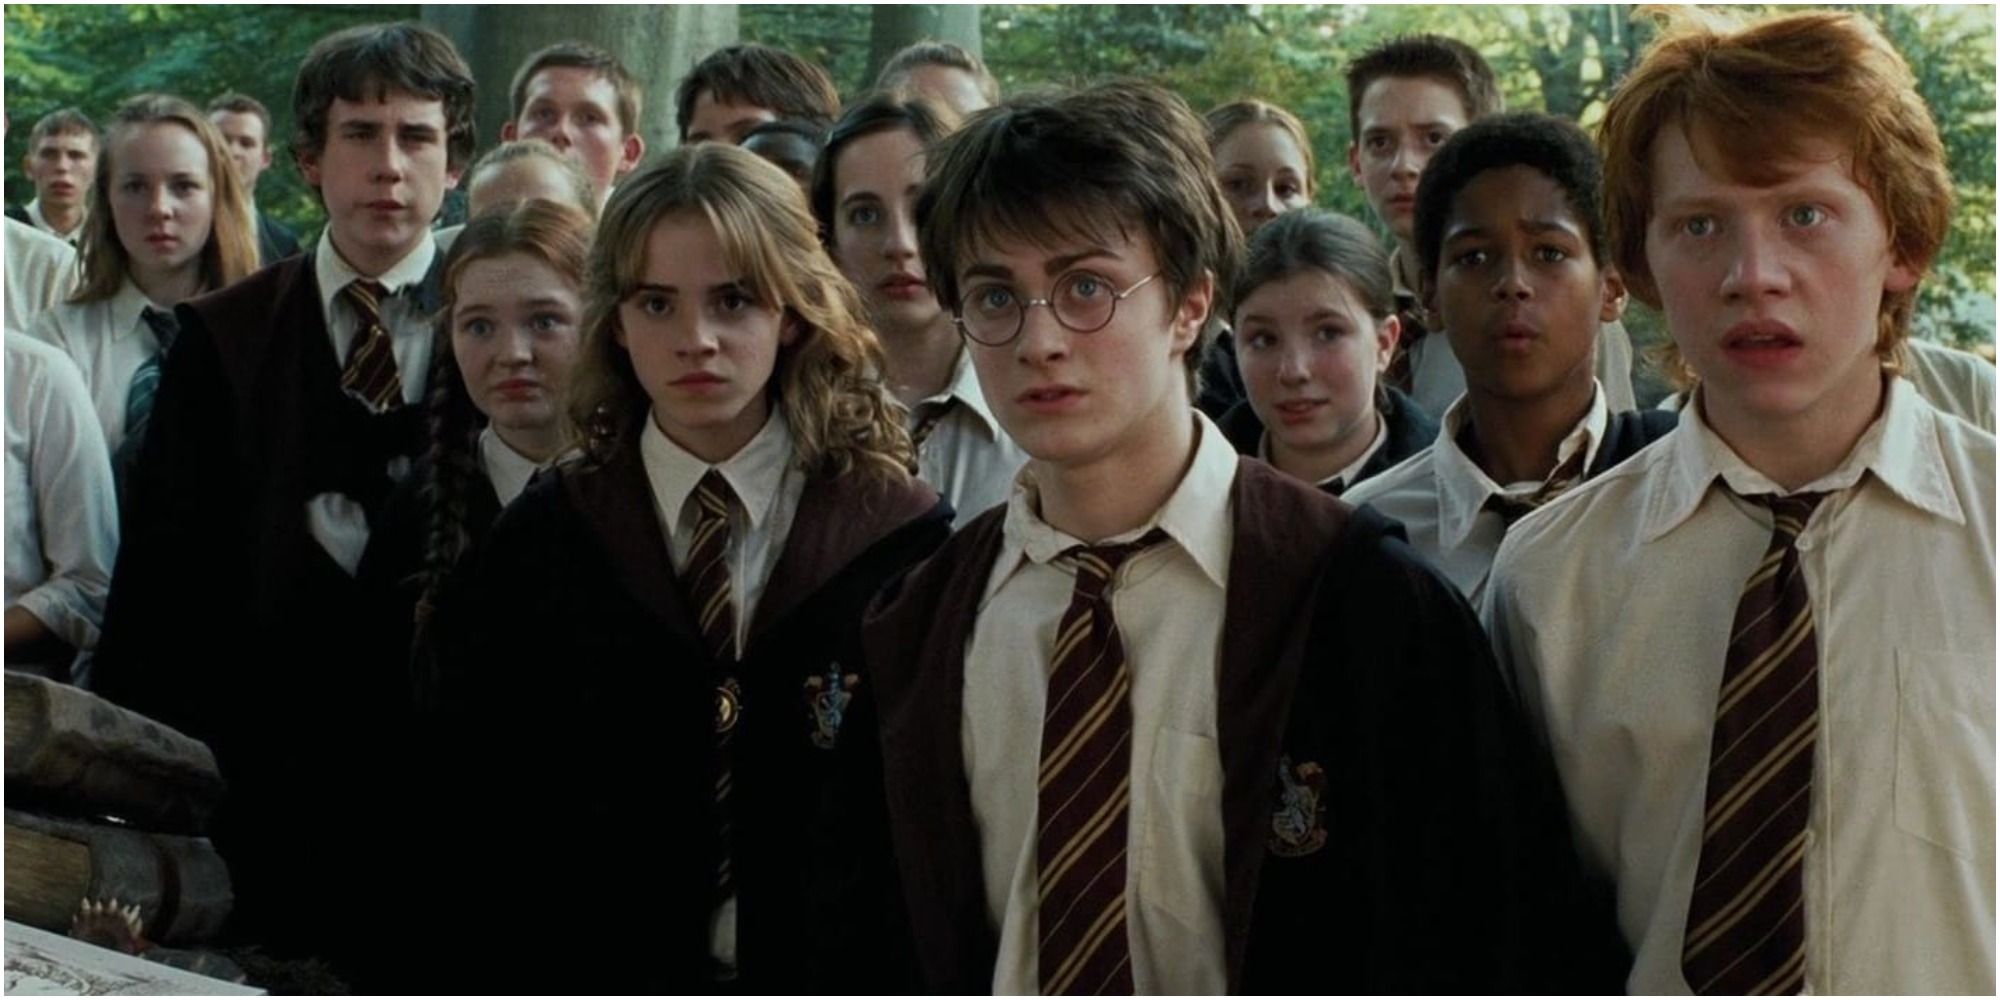 The Gryffindors all together in Prisoner of Azkaban.